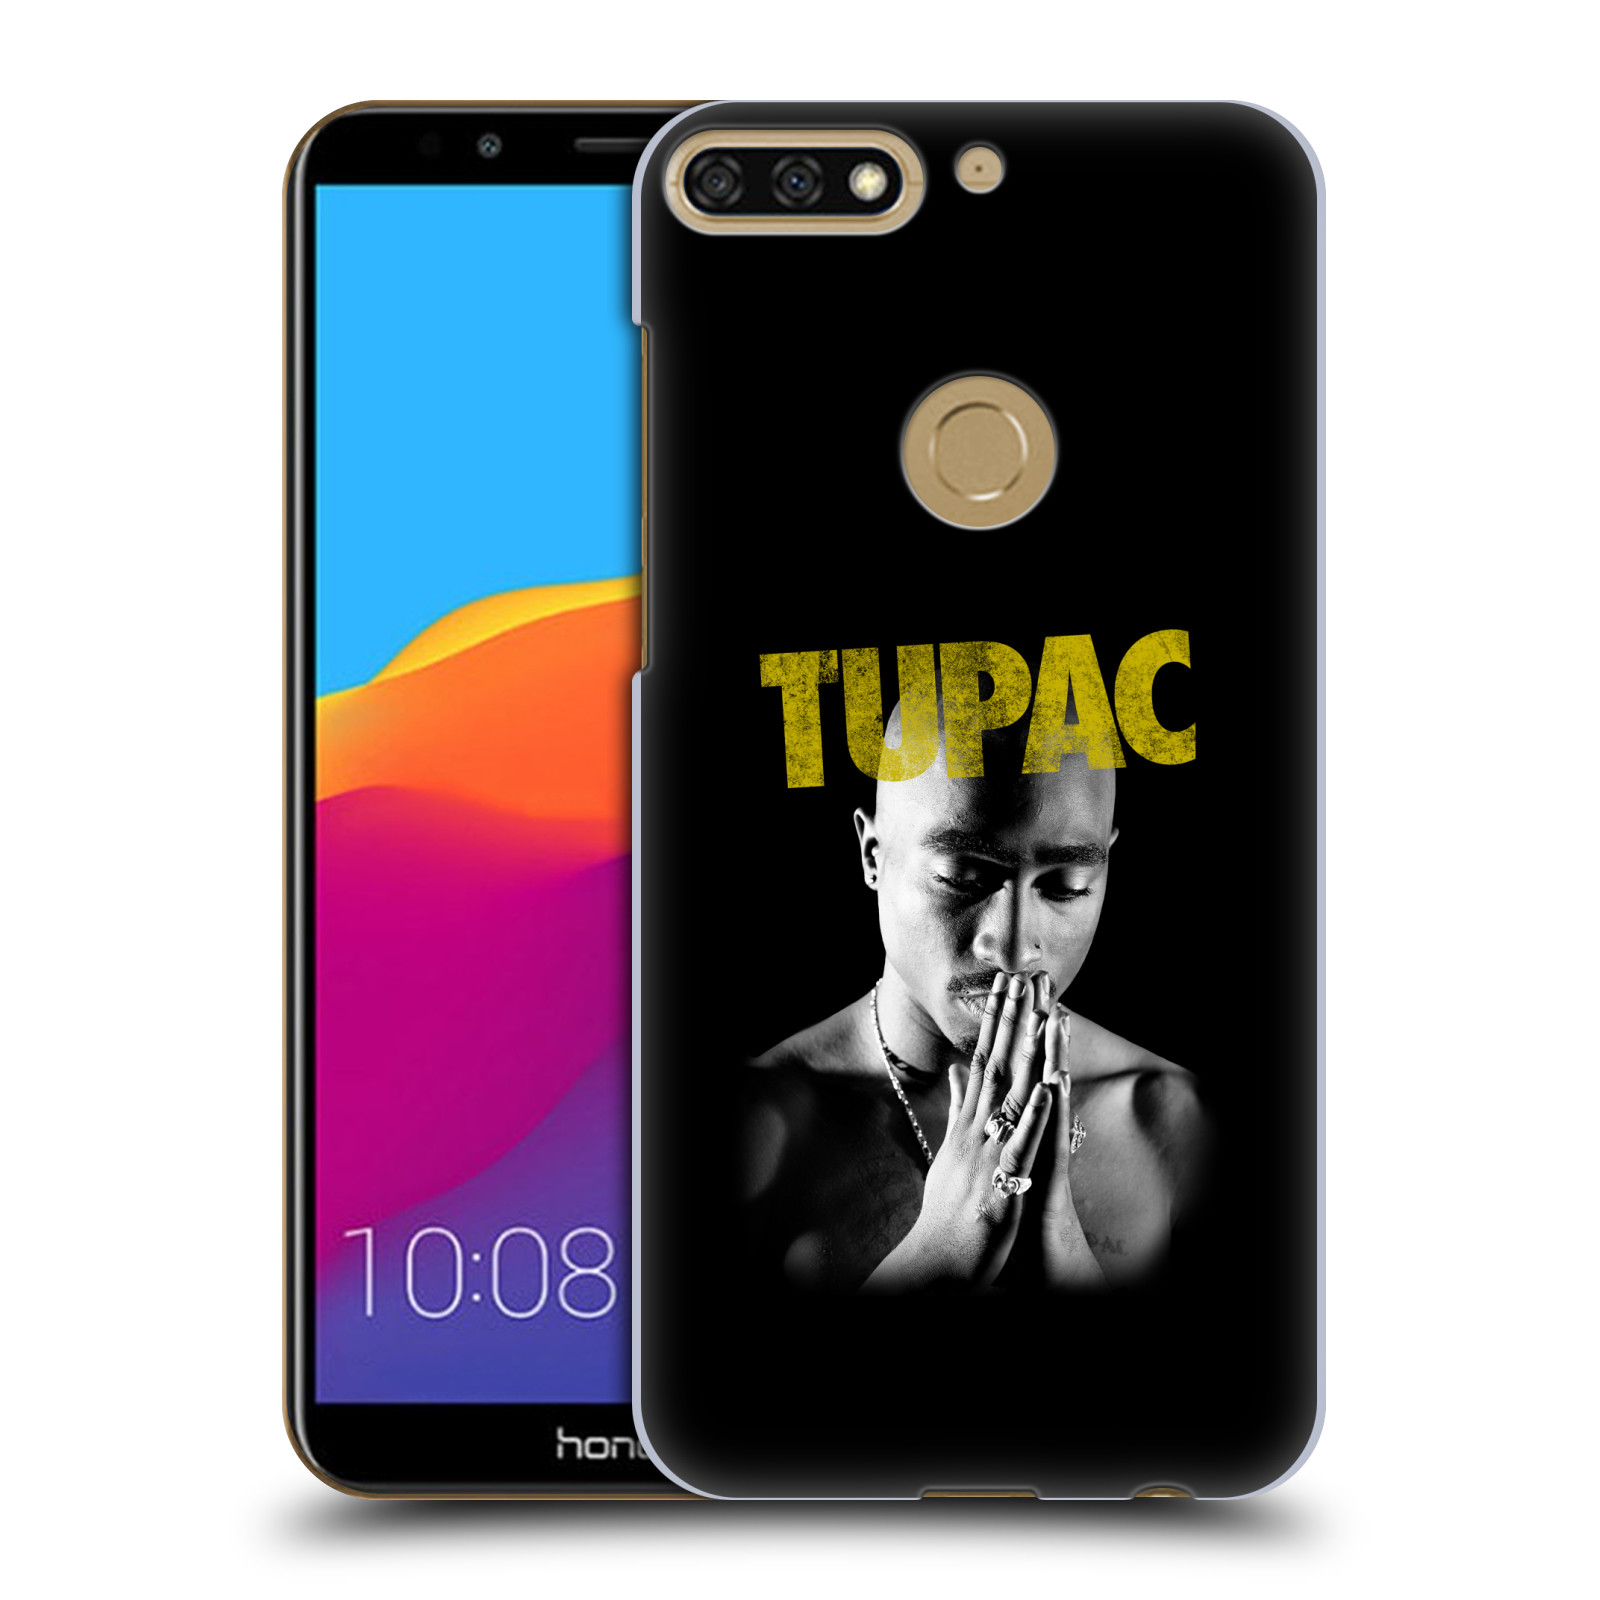 HEAD CASE plastový obal na mobil Honor 7c Zpěvák rapper Tupac Shakur 2Pac zlatý nadpis